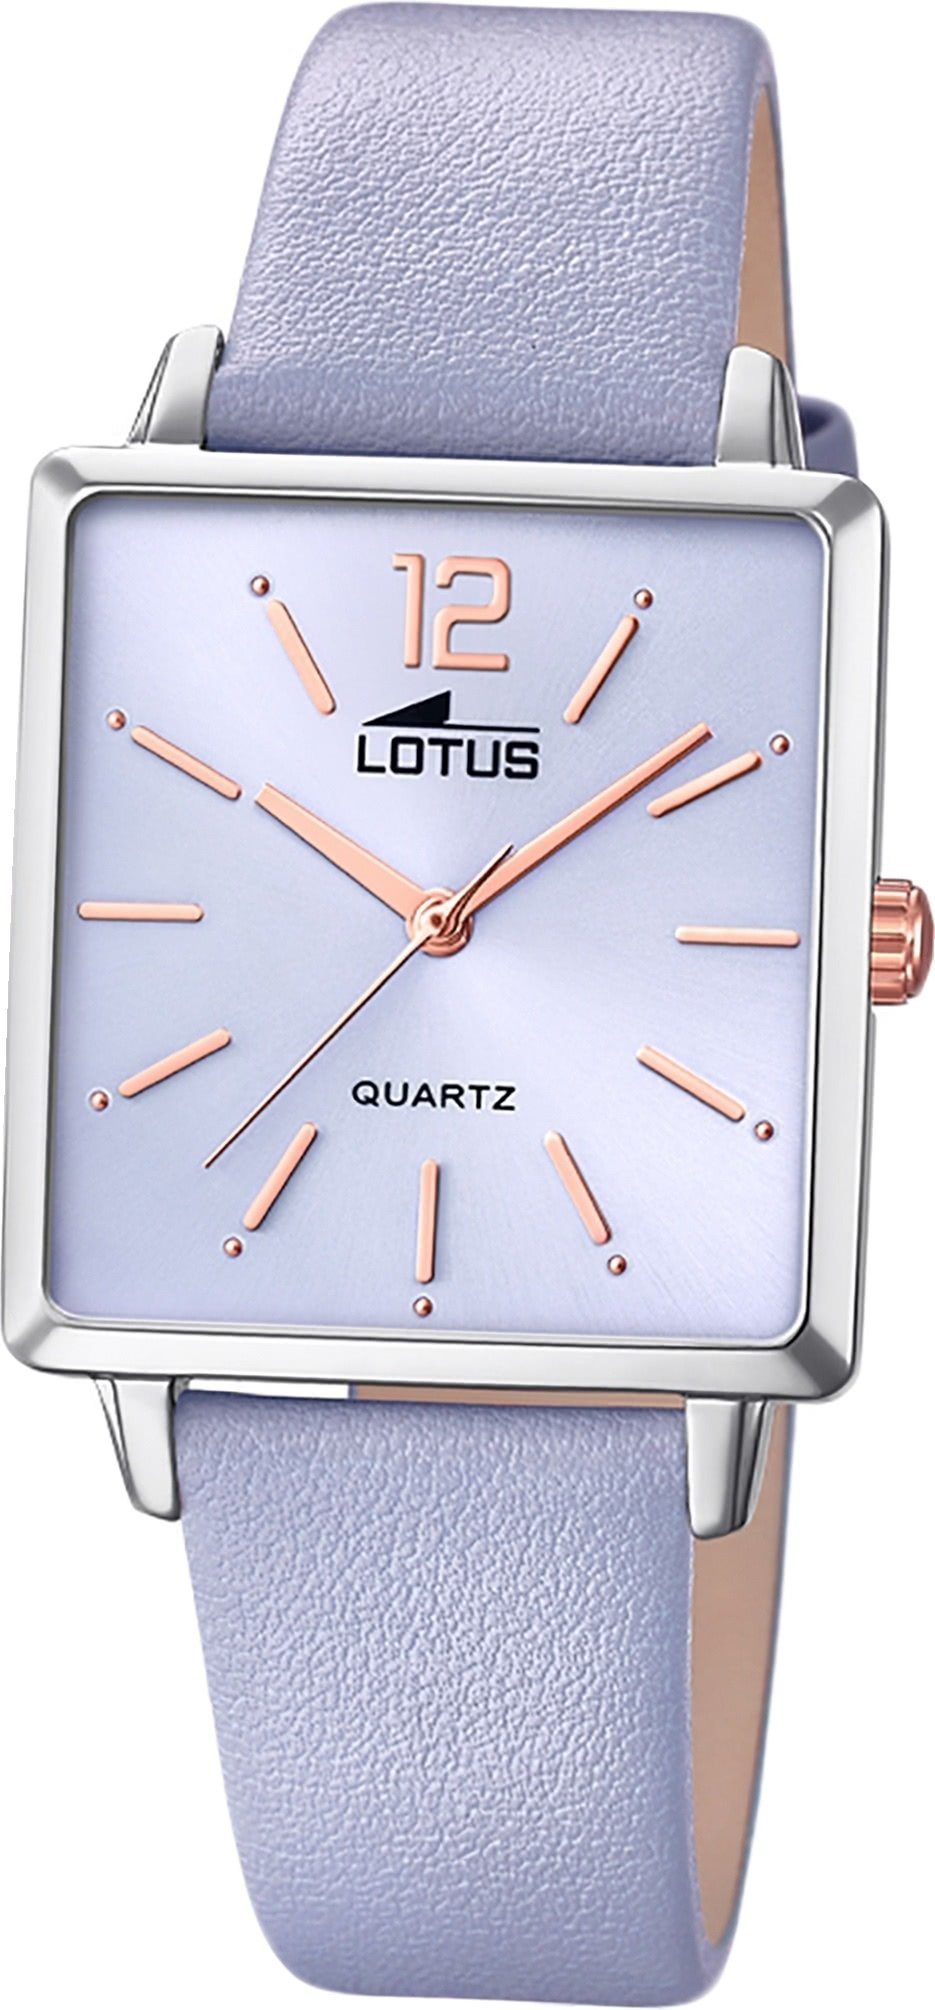 Damen Uhren Lotus Quarzuhr D2UL18712/3 LOTUS Leder Damen Uhr 18712/3 Quarz, Damenuhr mit Lederarmband, eckiges Gehäuse, klein (c